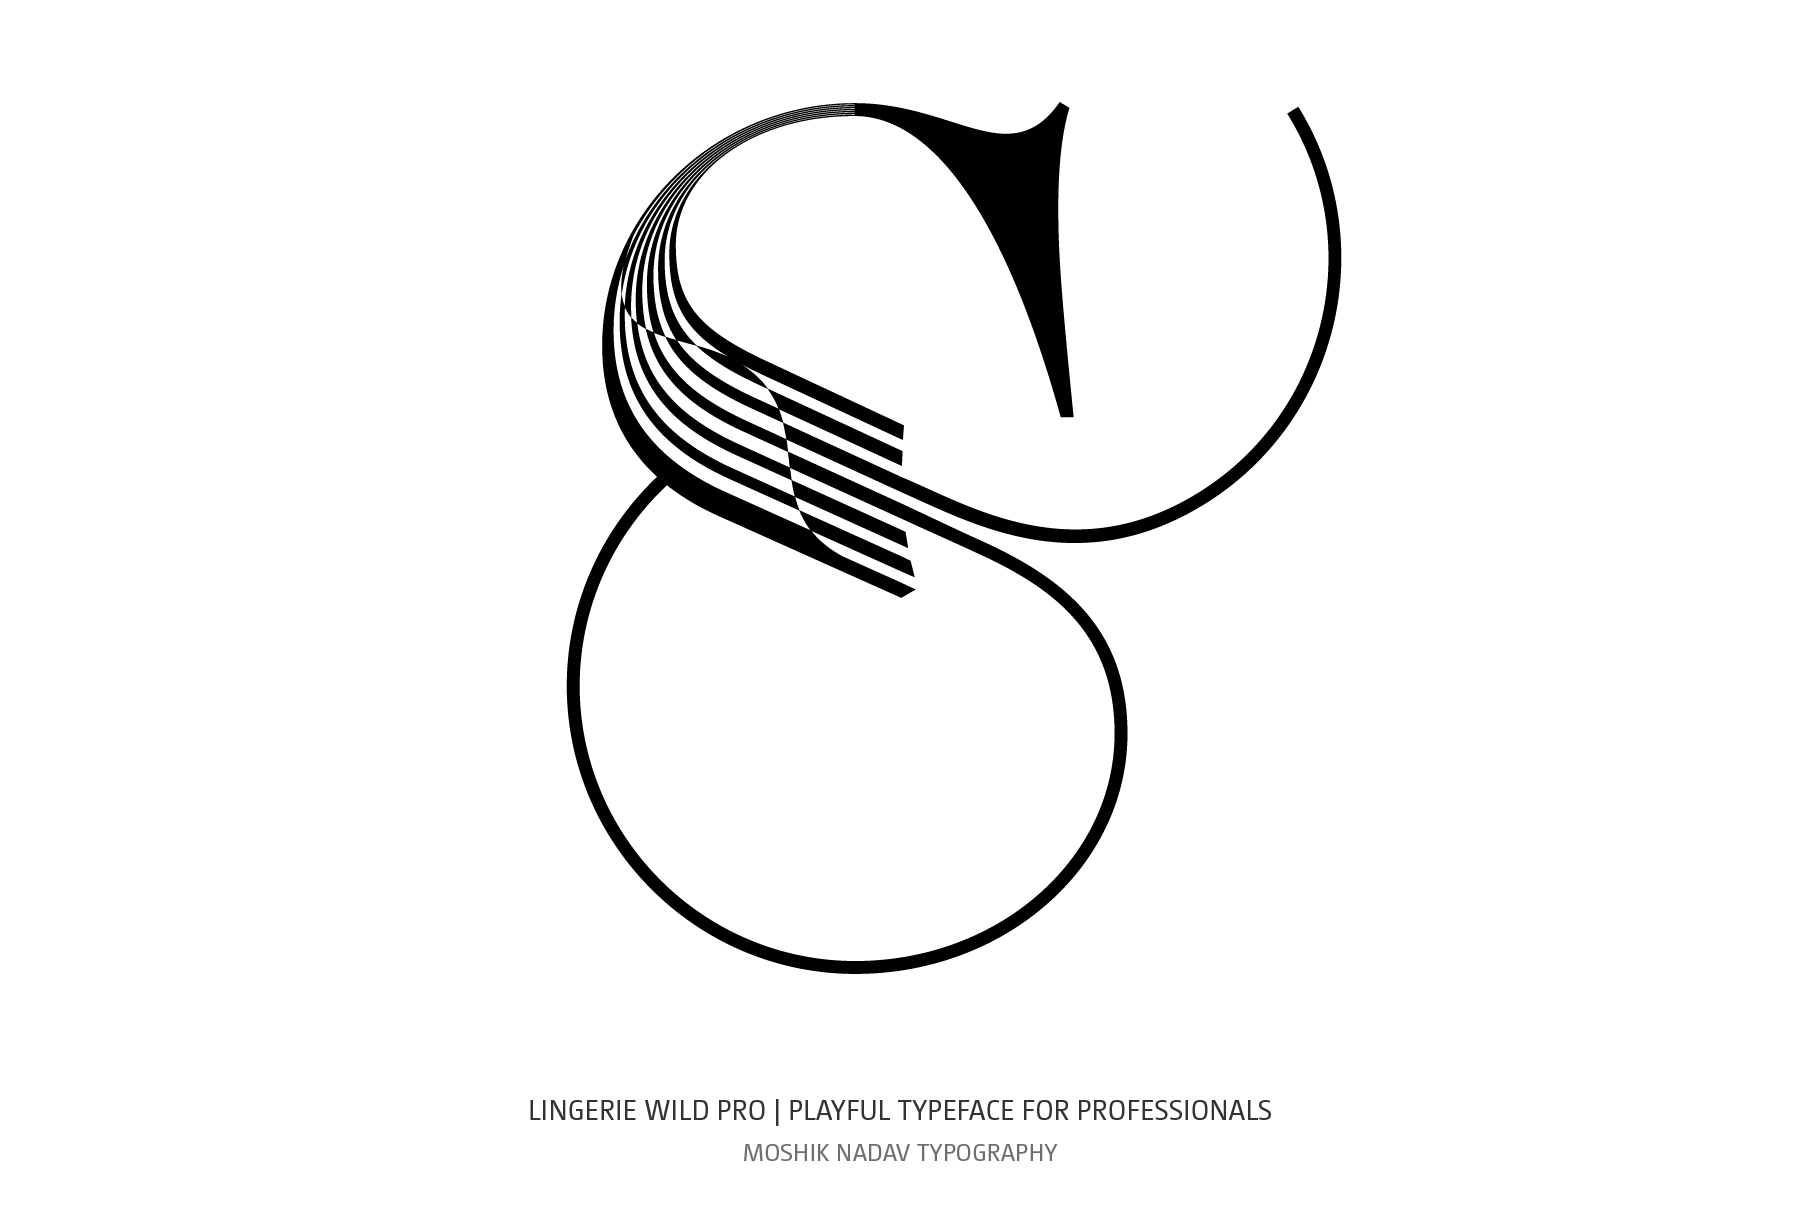 Original ampersand for logos and fashion by Moshik Nadav Typography